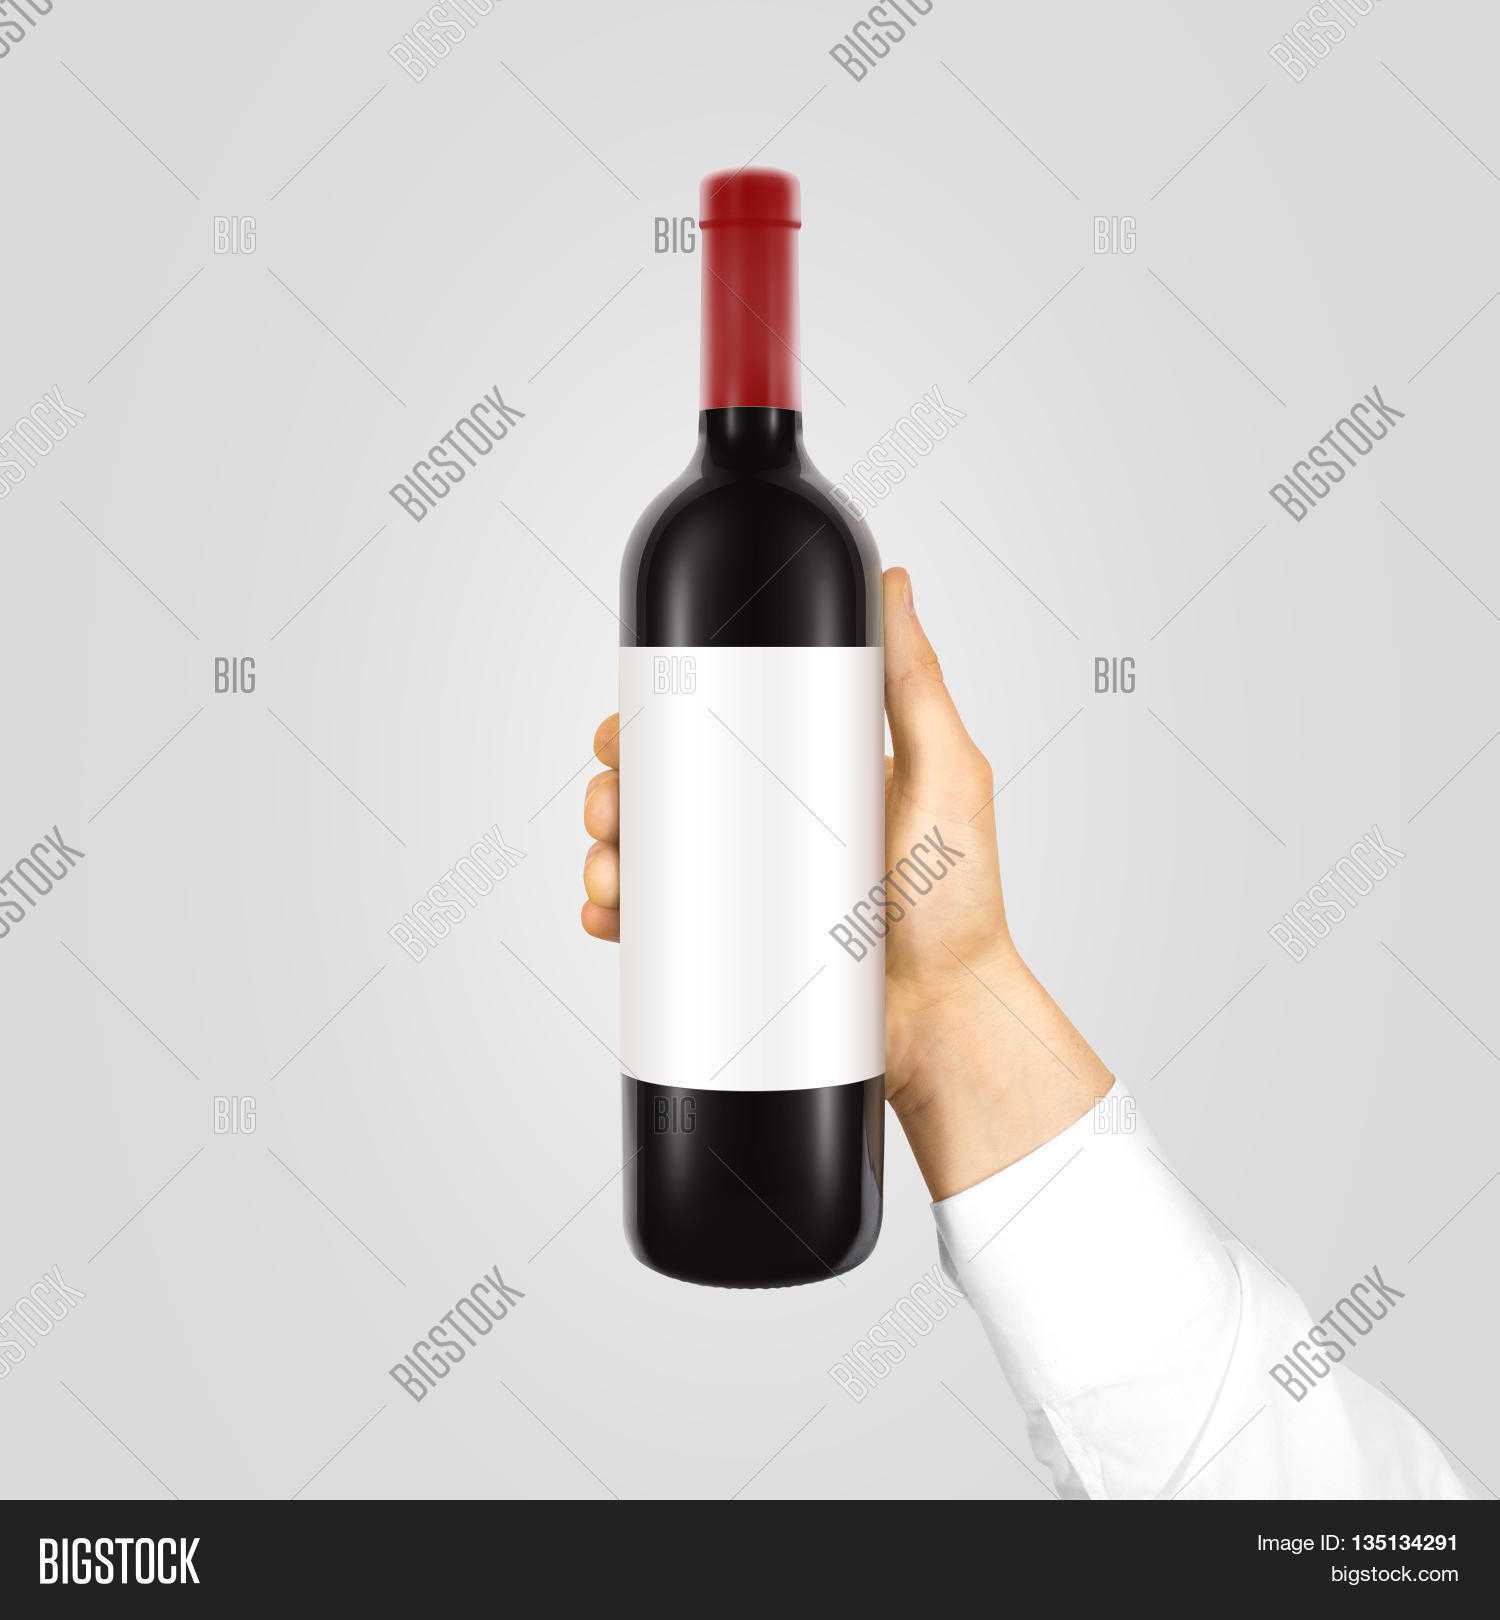 Blank White Label Image & Photo (Free Trial) | Bigstock Inside Blank Wine Label Template